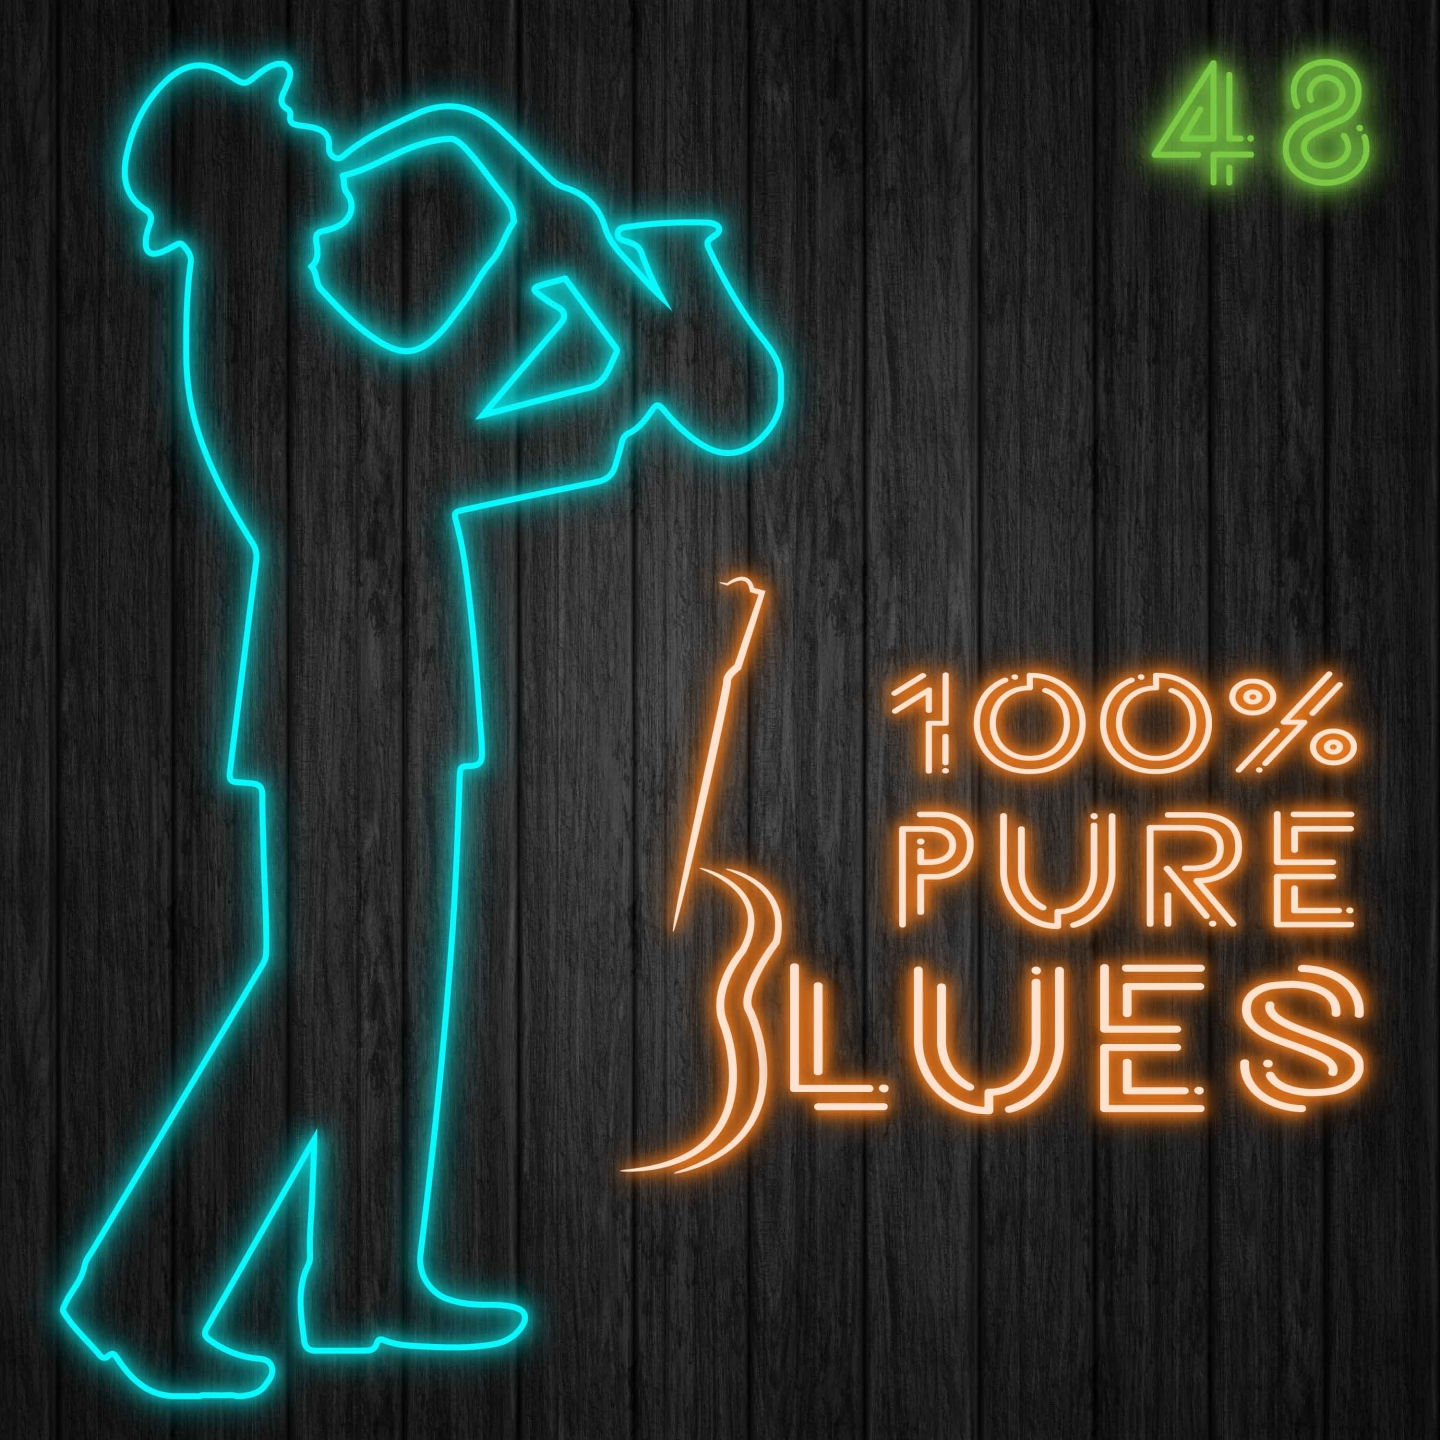 100% Pure Blues / 48